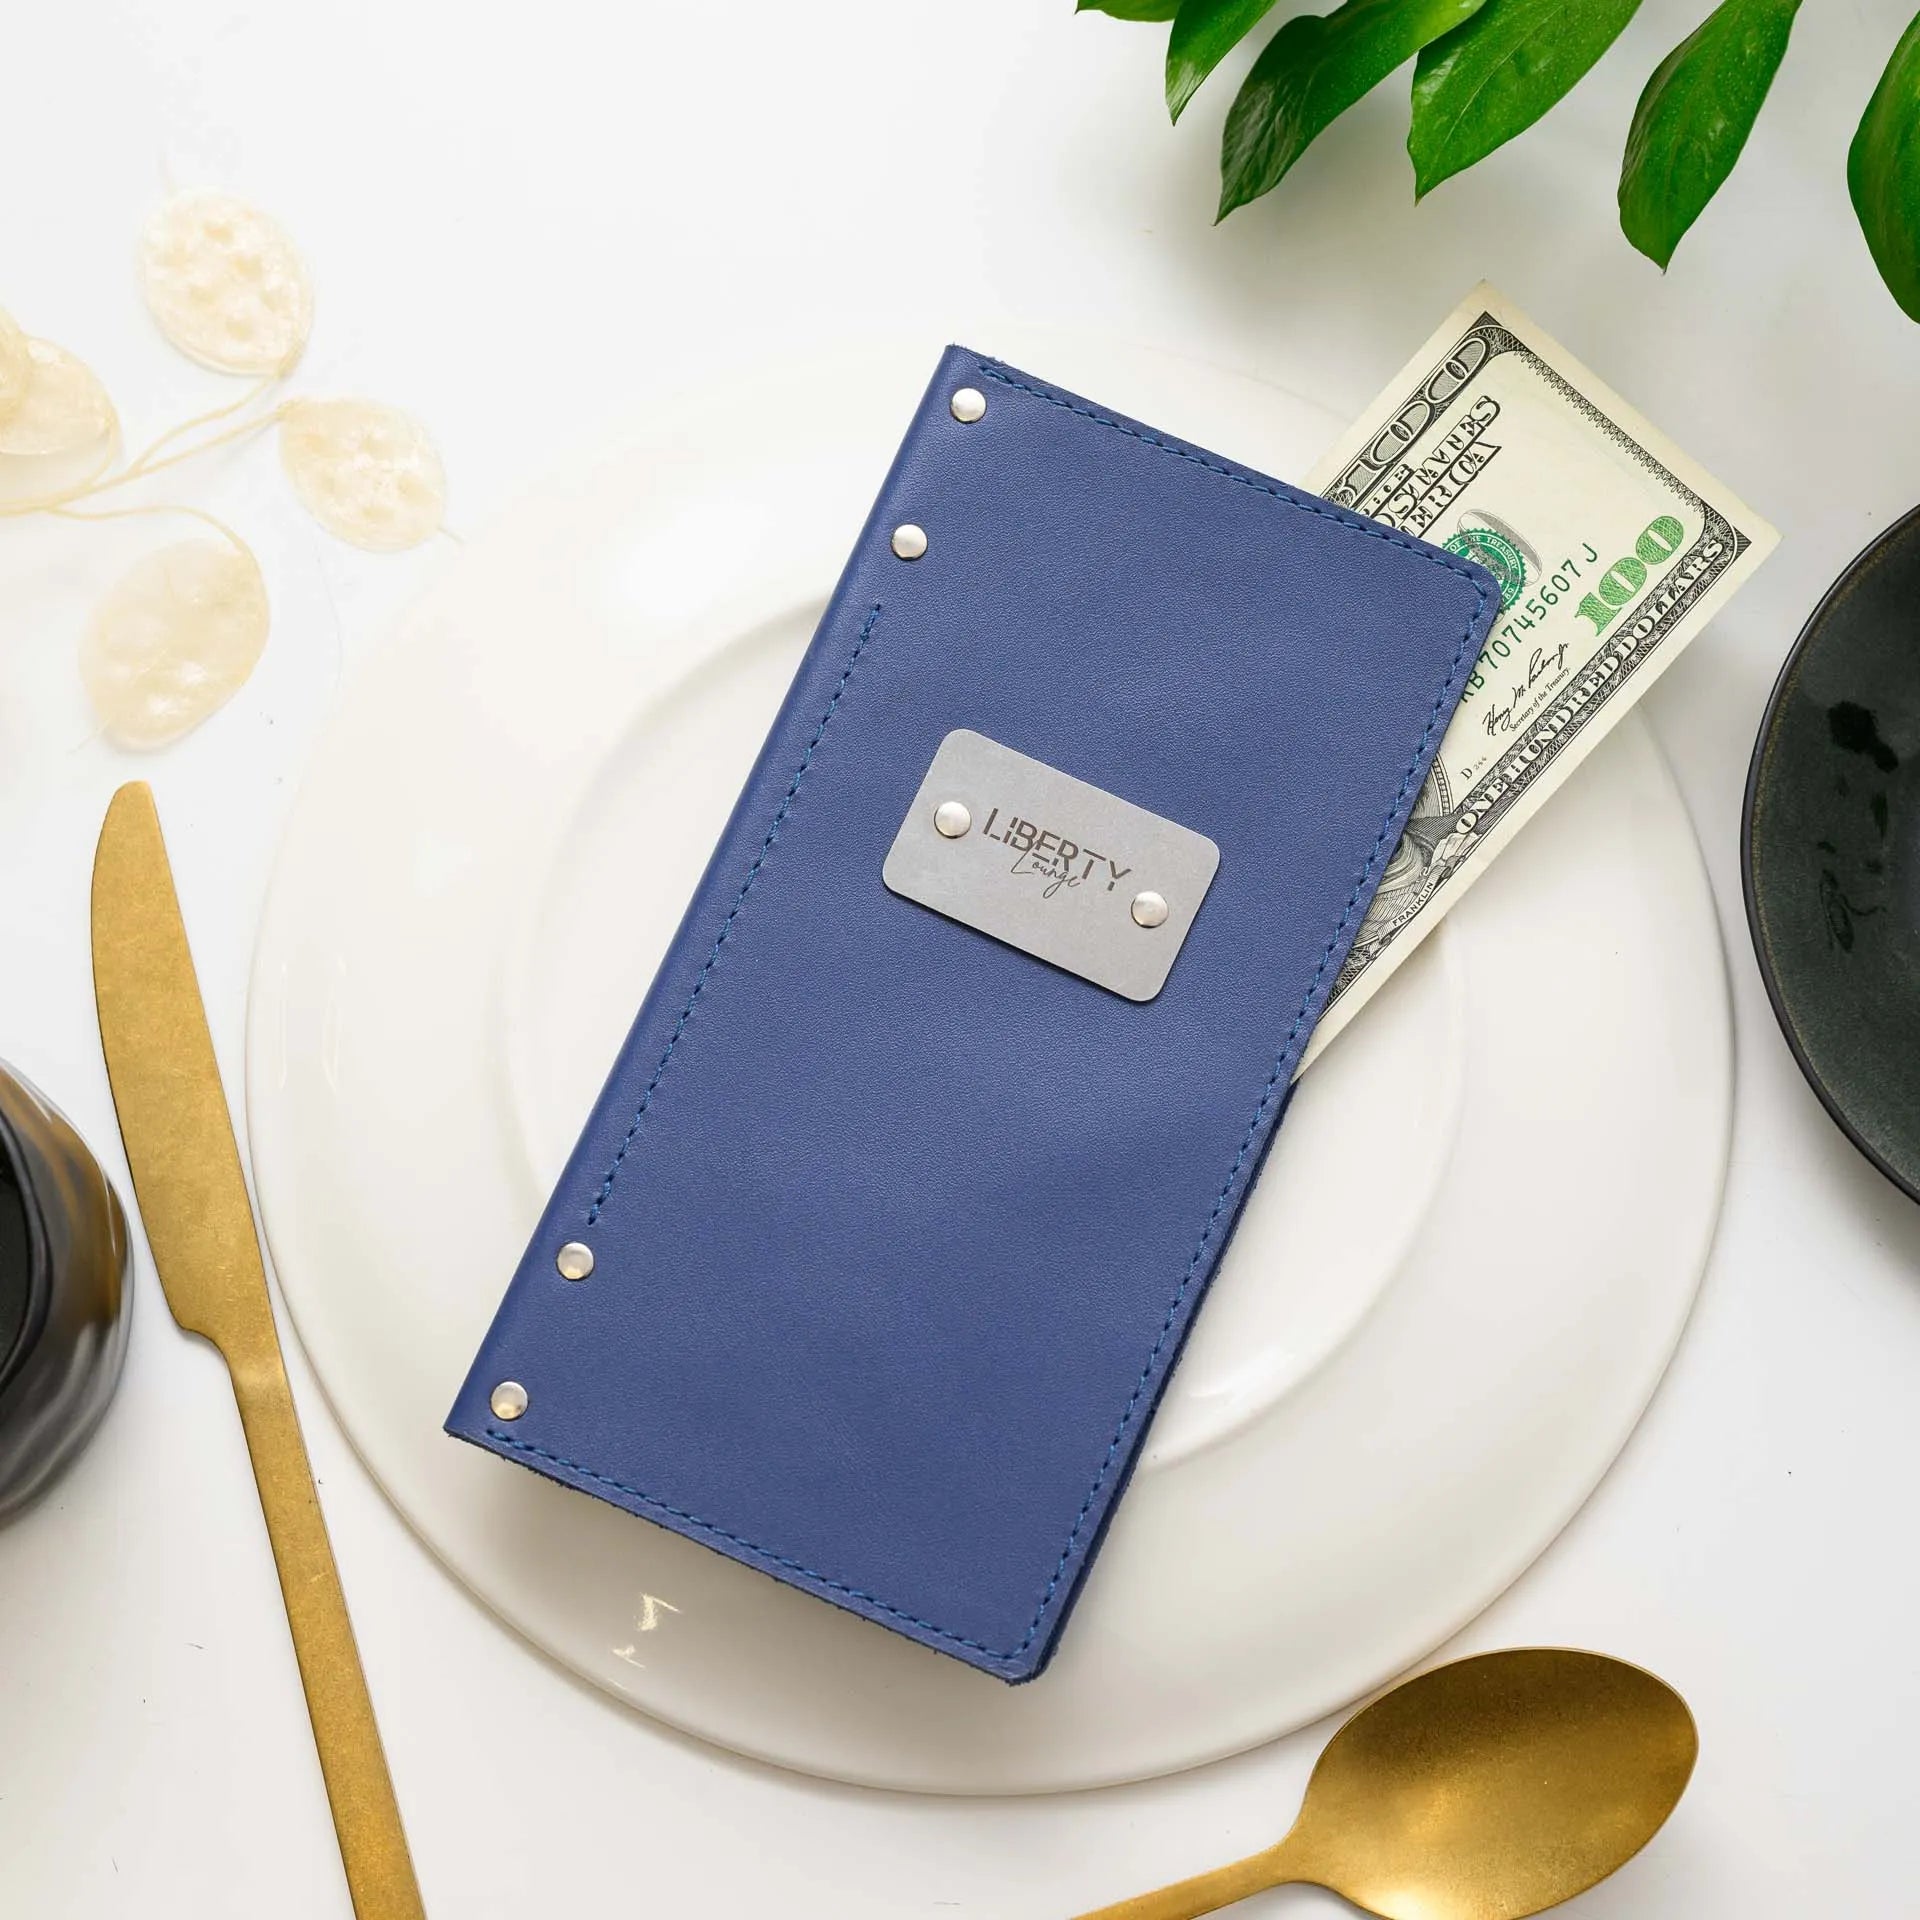 Check holder for restaurants: keep tabs organized.